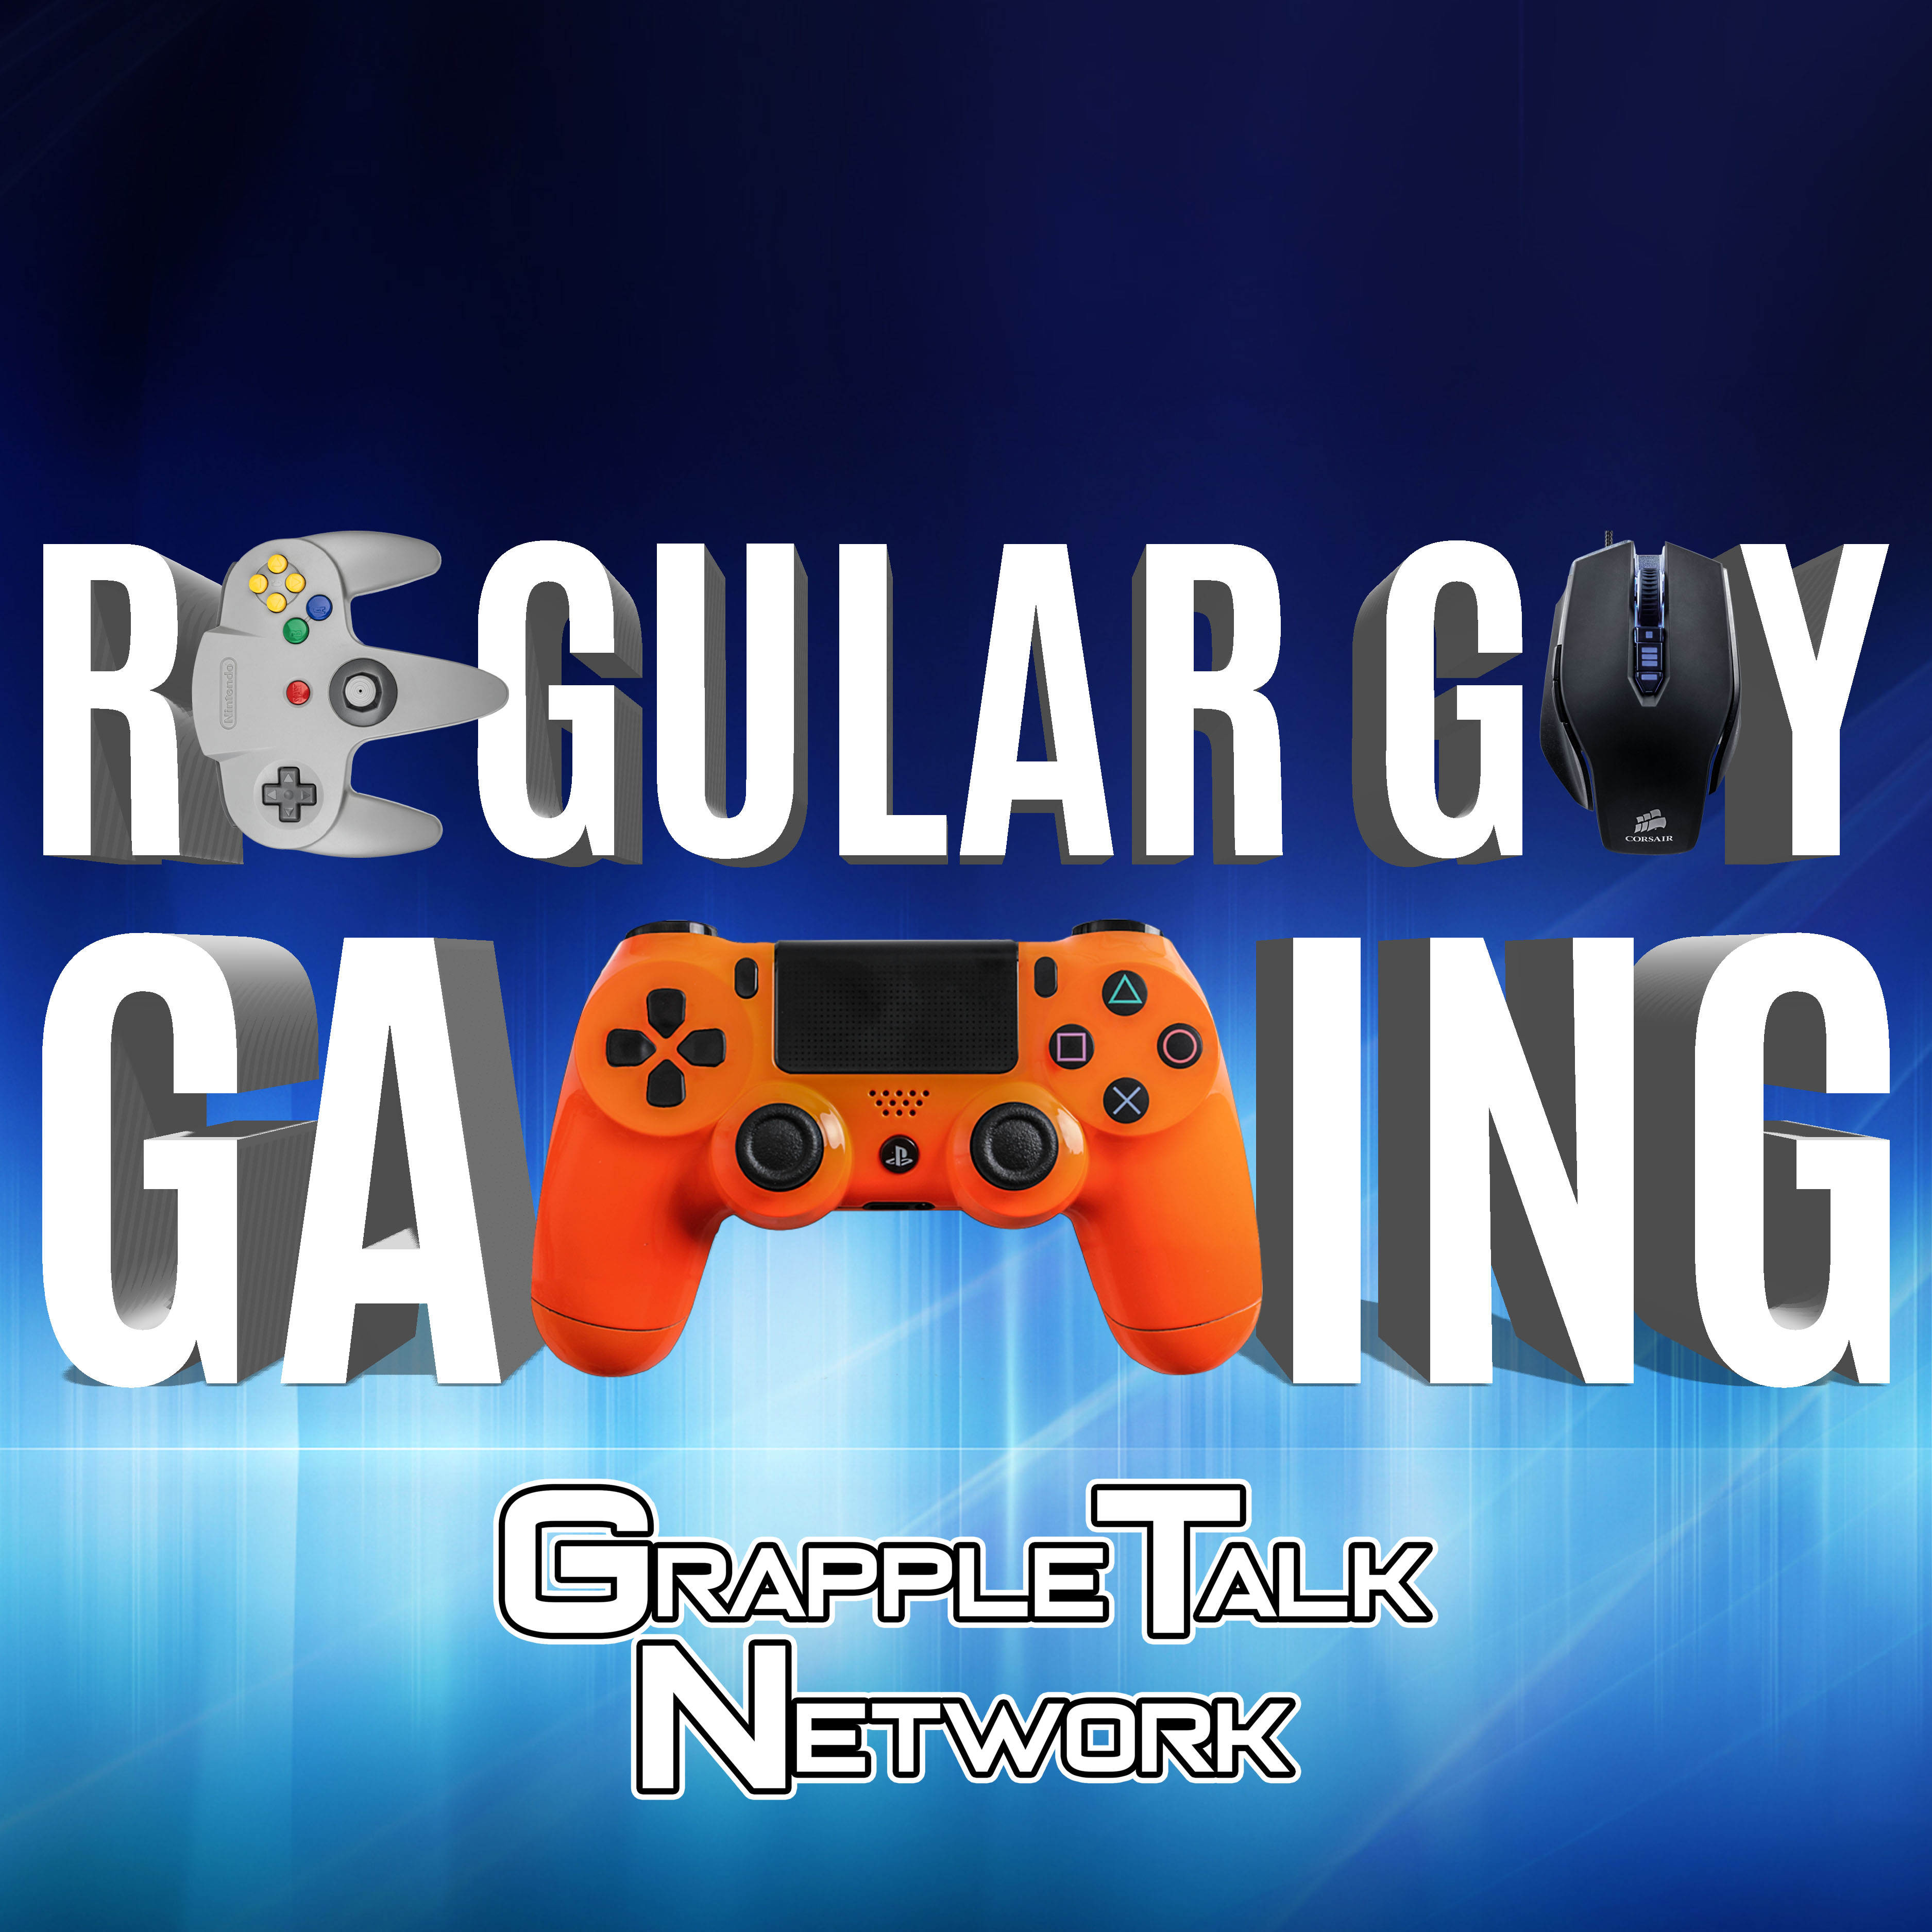 Regular Guy Gaming #18 featuring Tara Larosa